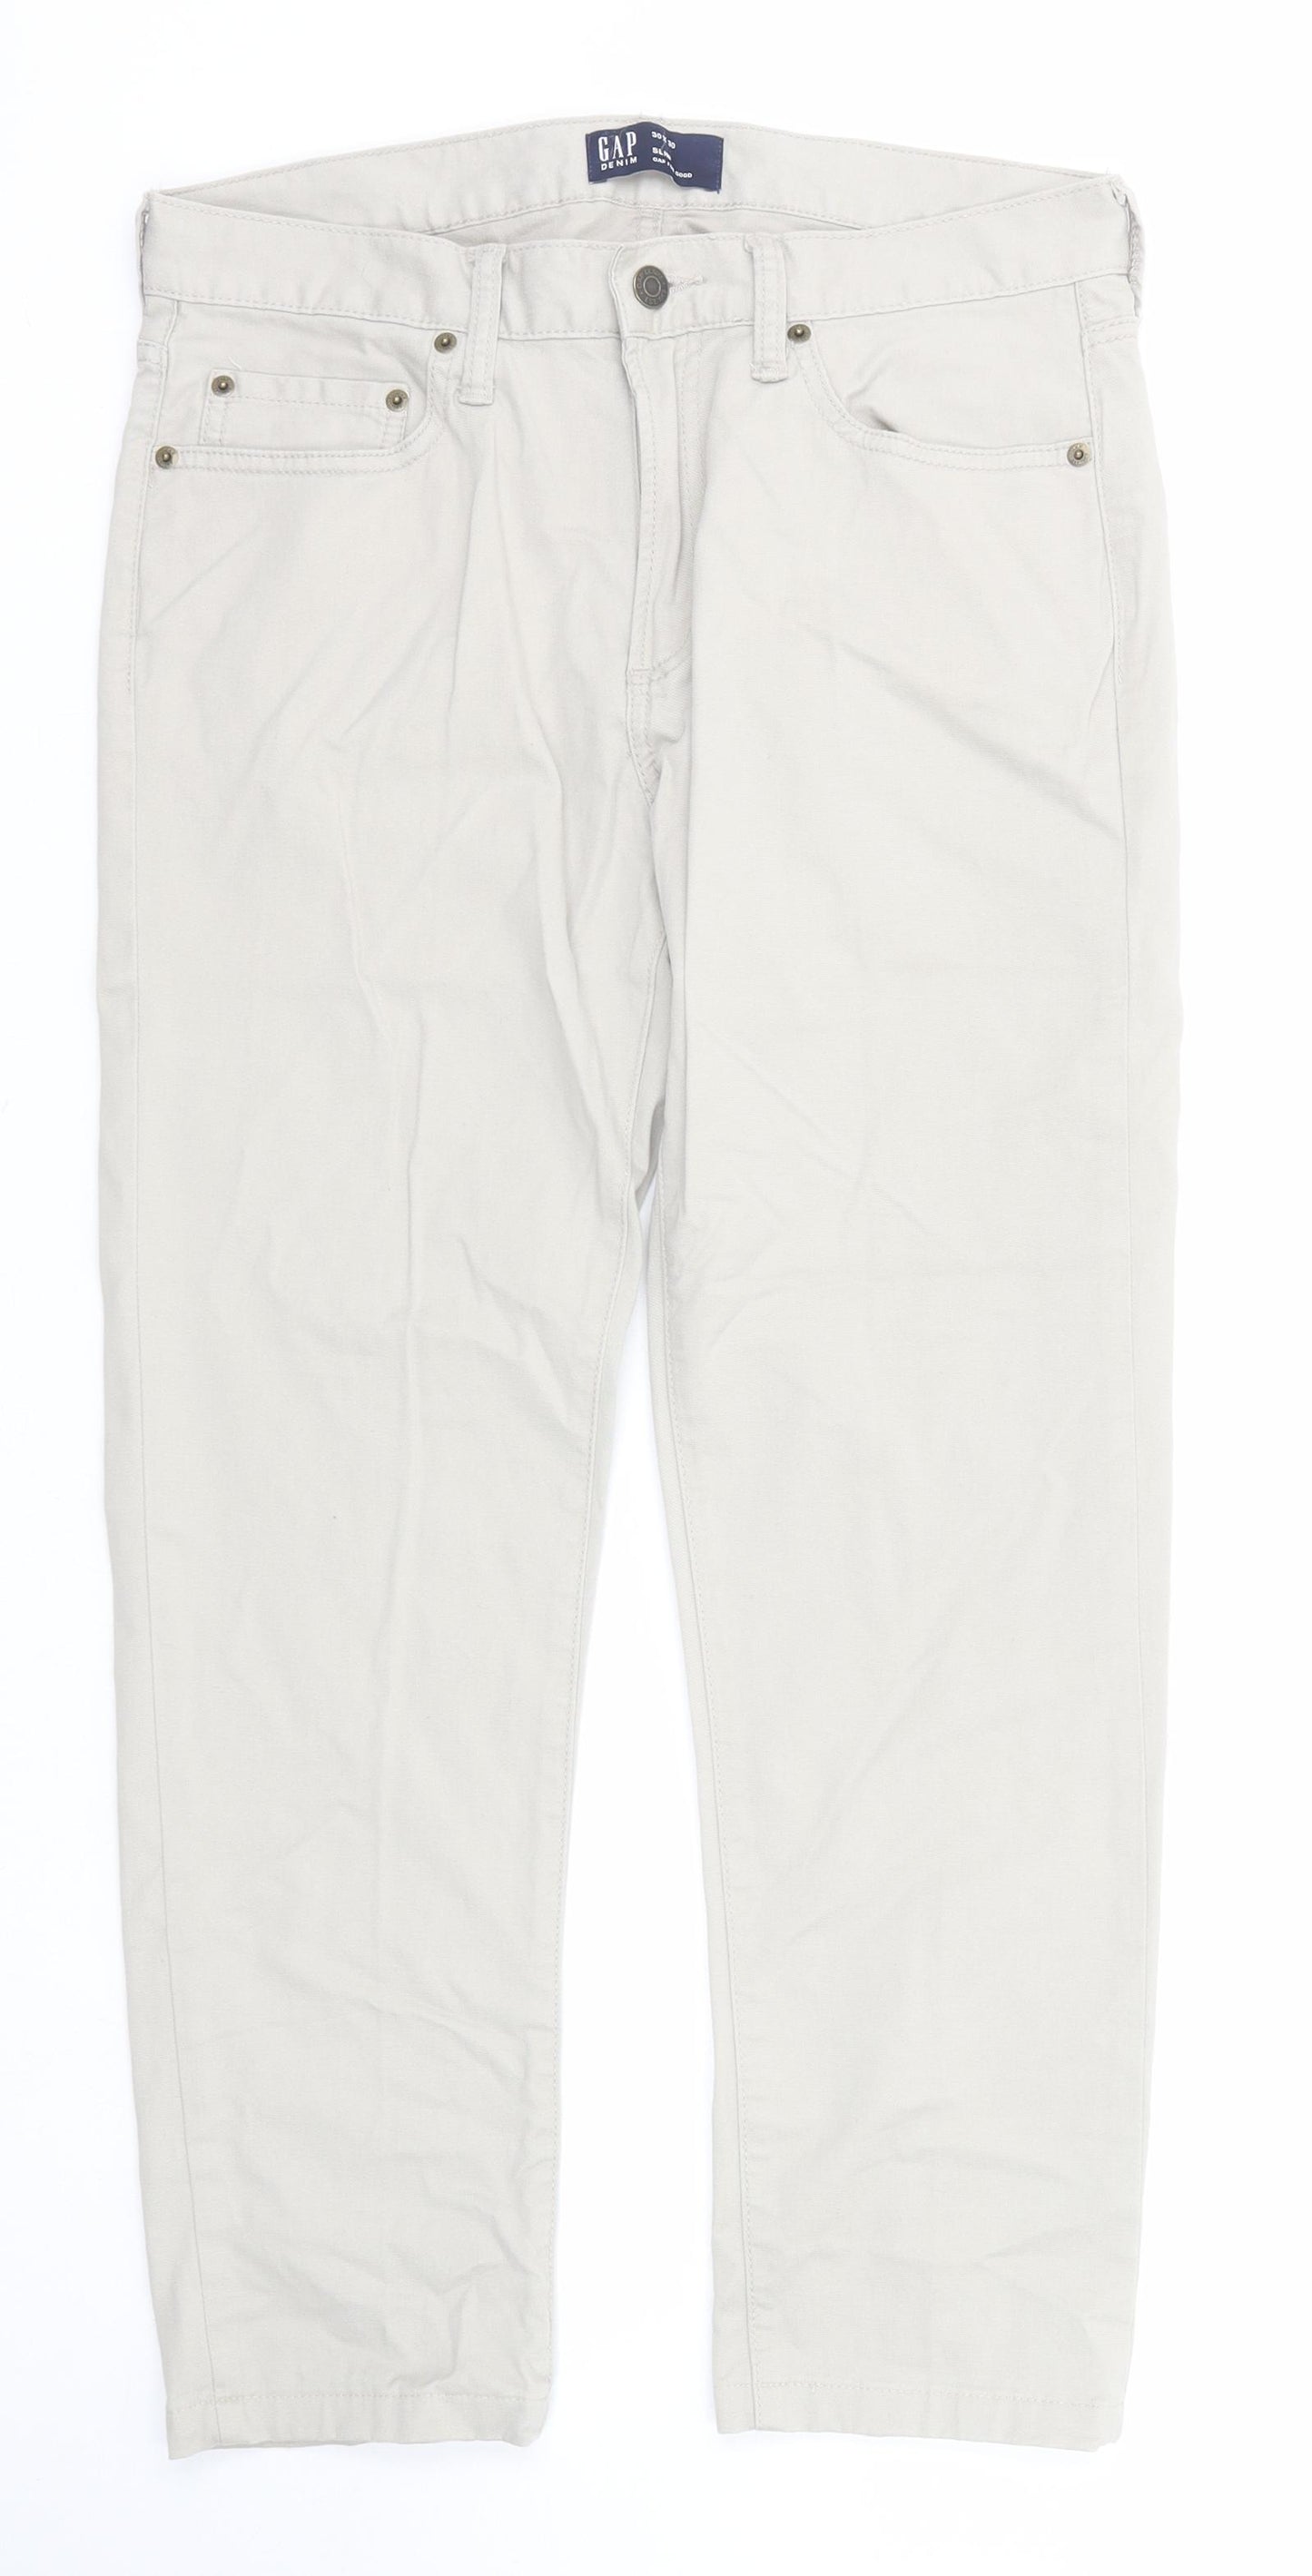 Gap Mens Beige Cotton Trousers Size 30 in L30 in Regular Zip